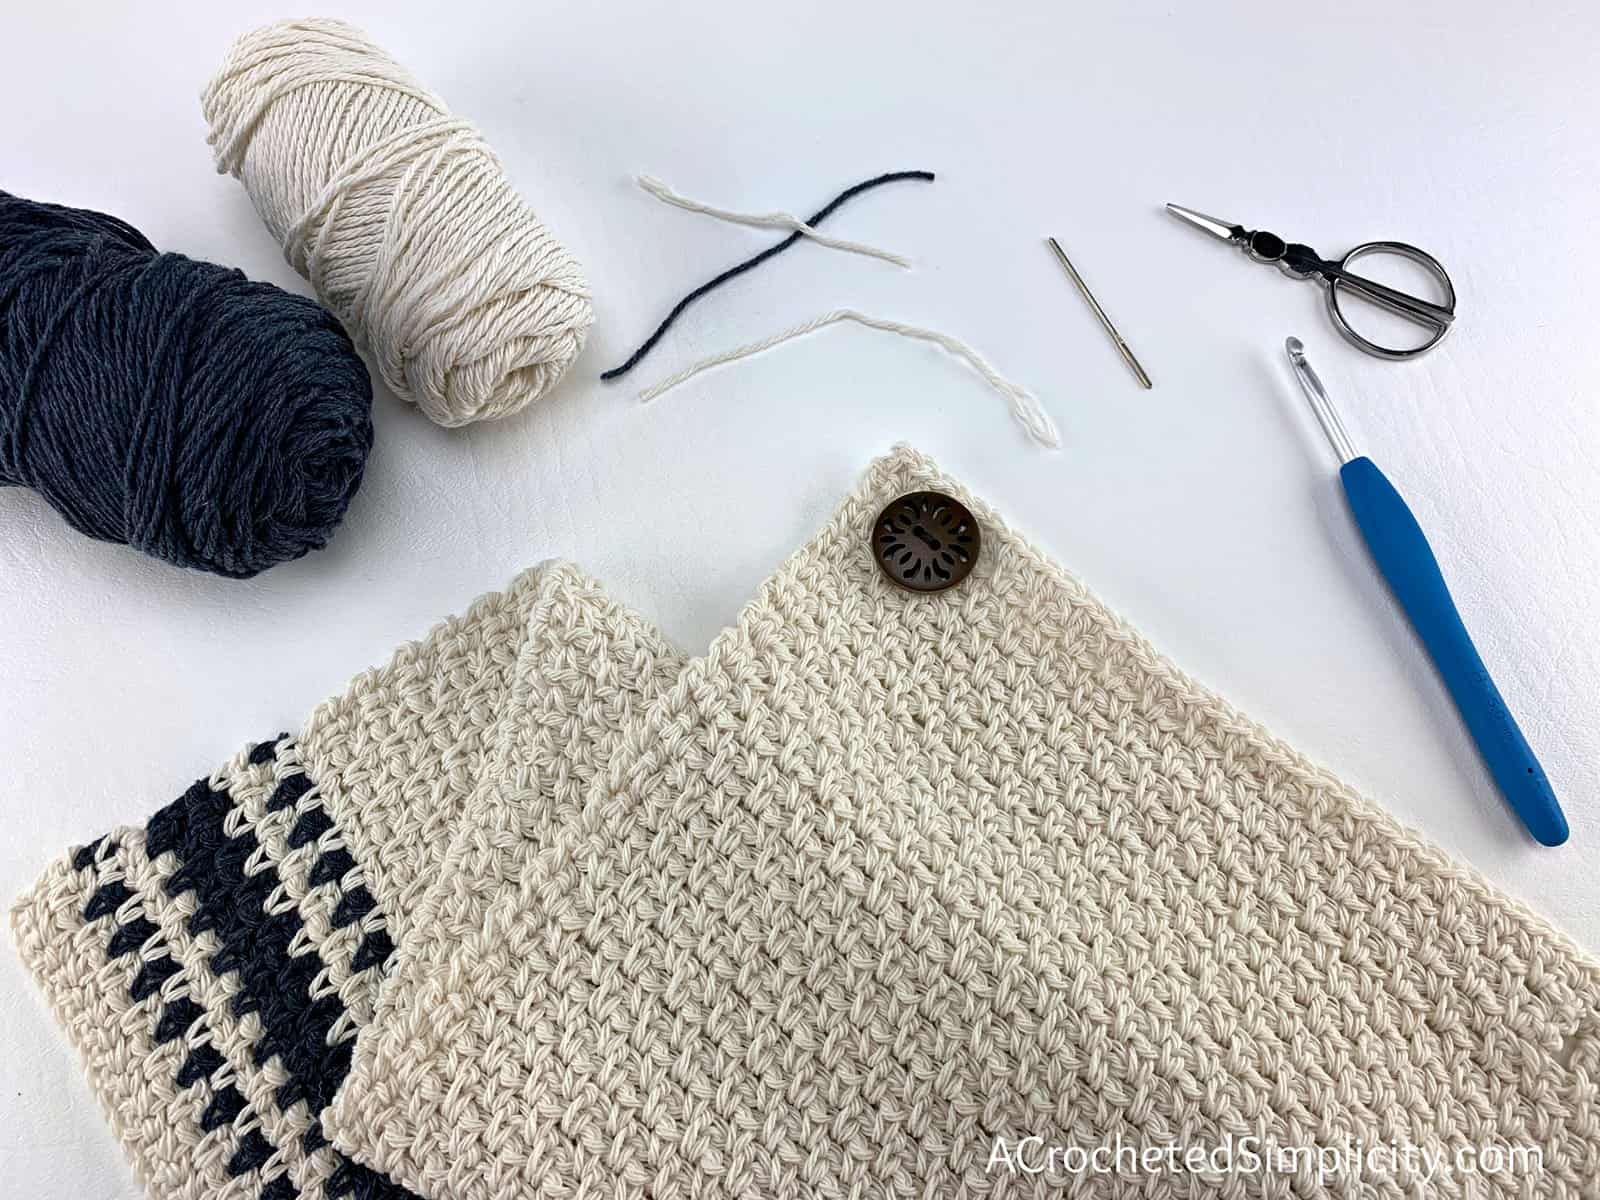 Free Crochet Pattern - Buffalo Plaid Dish Towel by A Crocheted Simplicity #buffaloplaidtowel #farmhousecrochet #freecrochetpattern #crochetdishtowel #crochetteatowel #farmhousestripedtowel #crochetkitchentowel